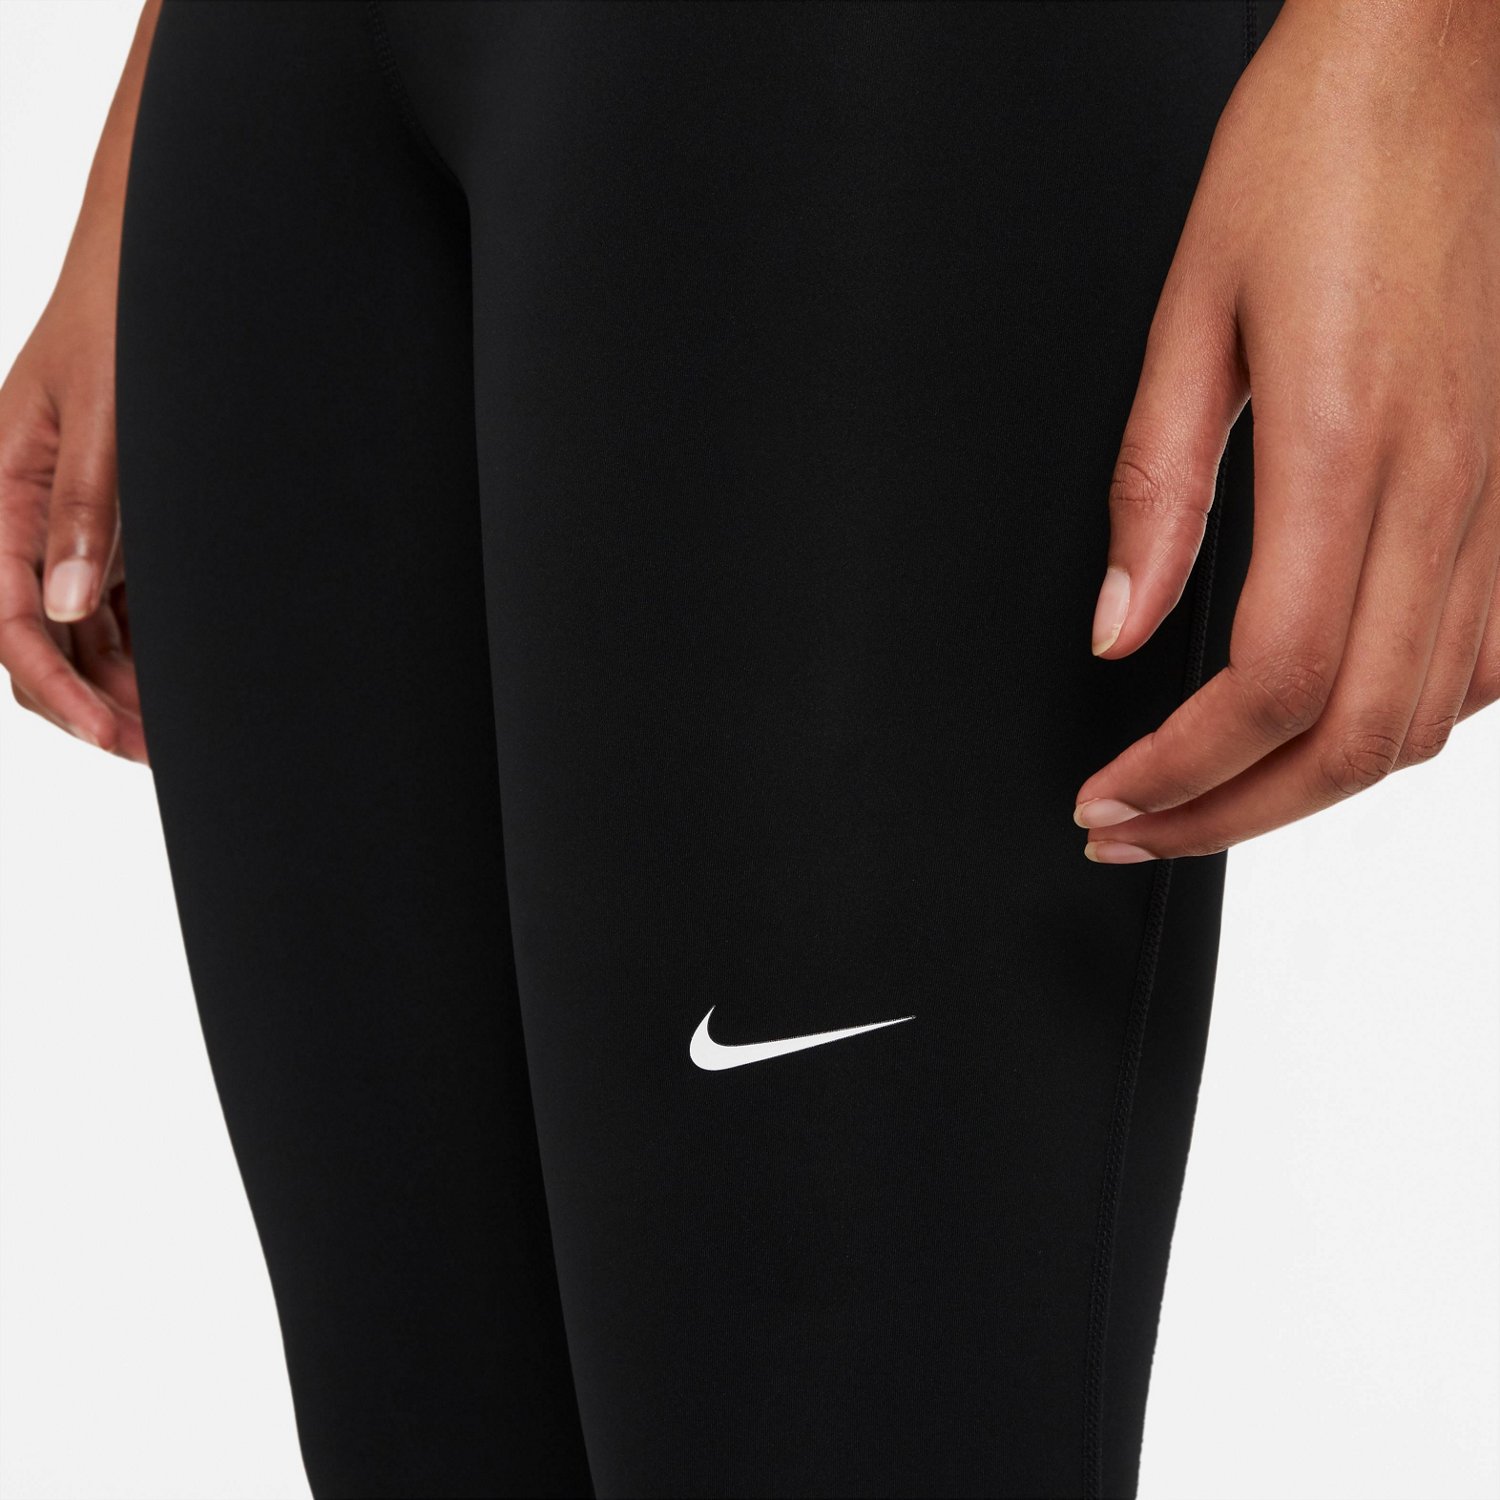 Nike Women'sPro 365 Tights